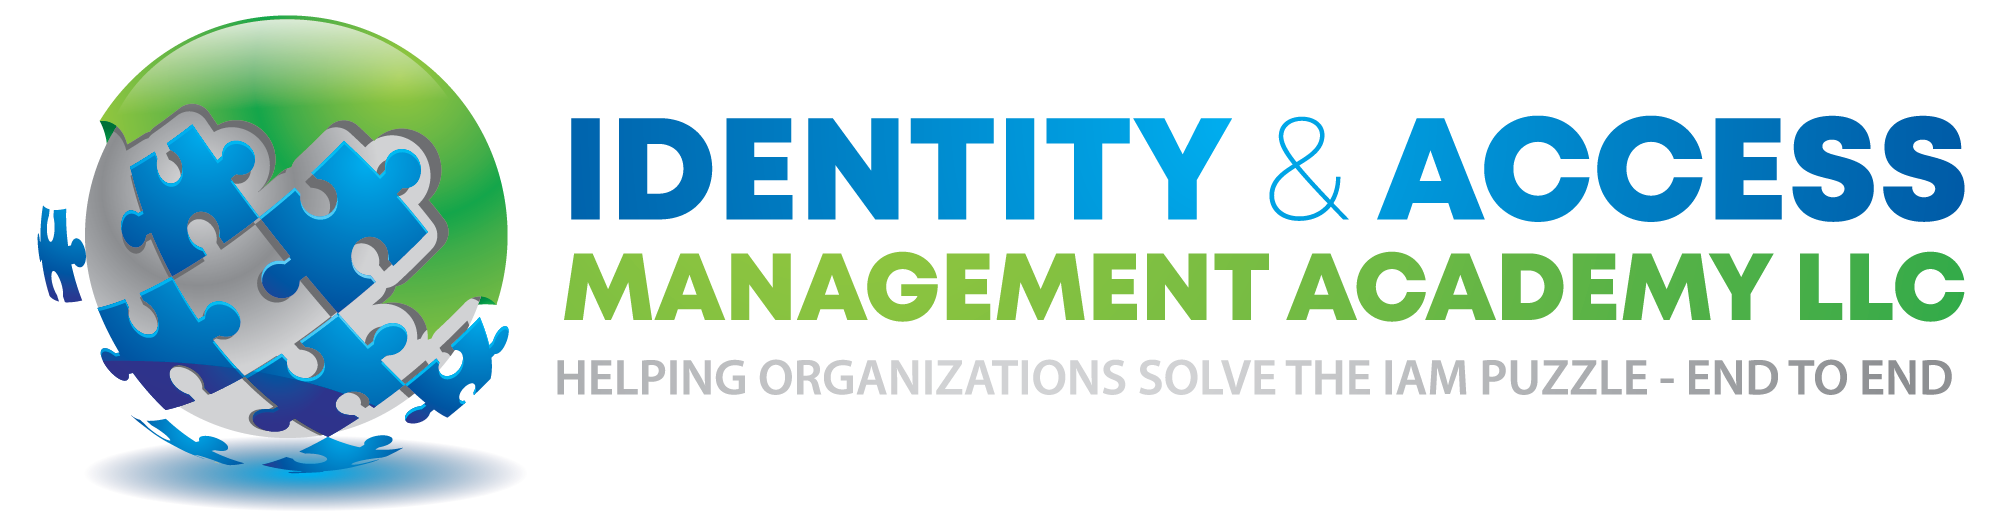 Identity Access Management Academy